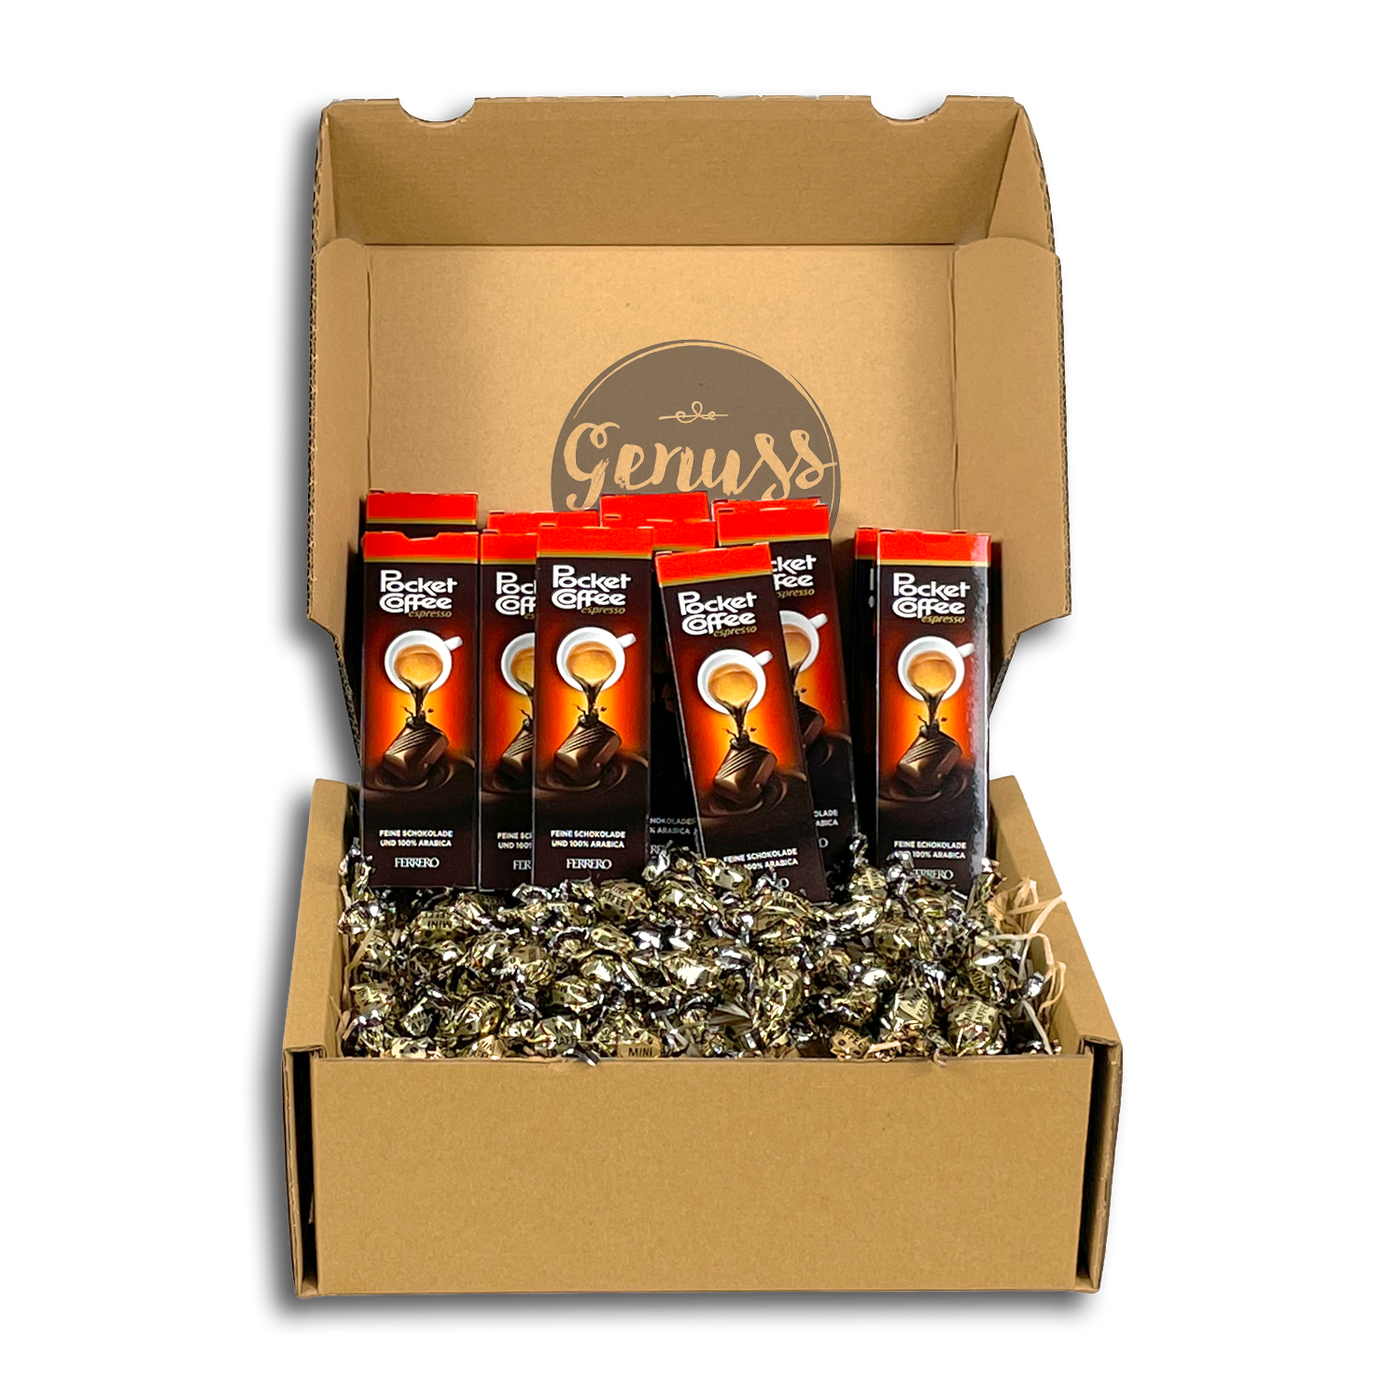 Genussleben Box mit 45x Ferrero Pocket & 300g Kaffeebonbons